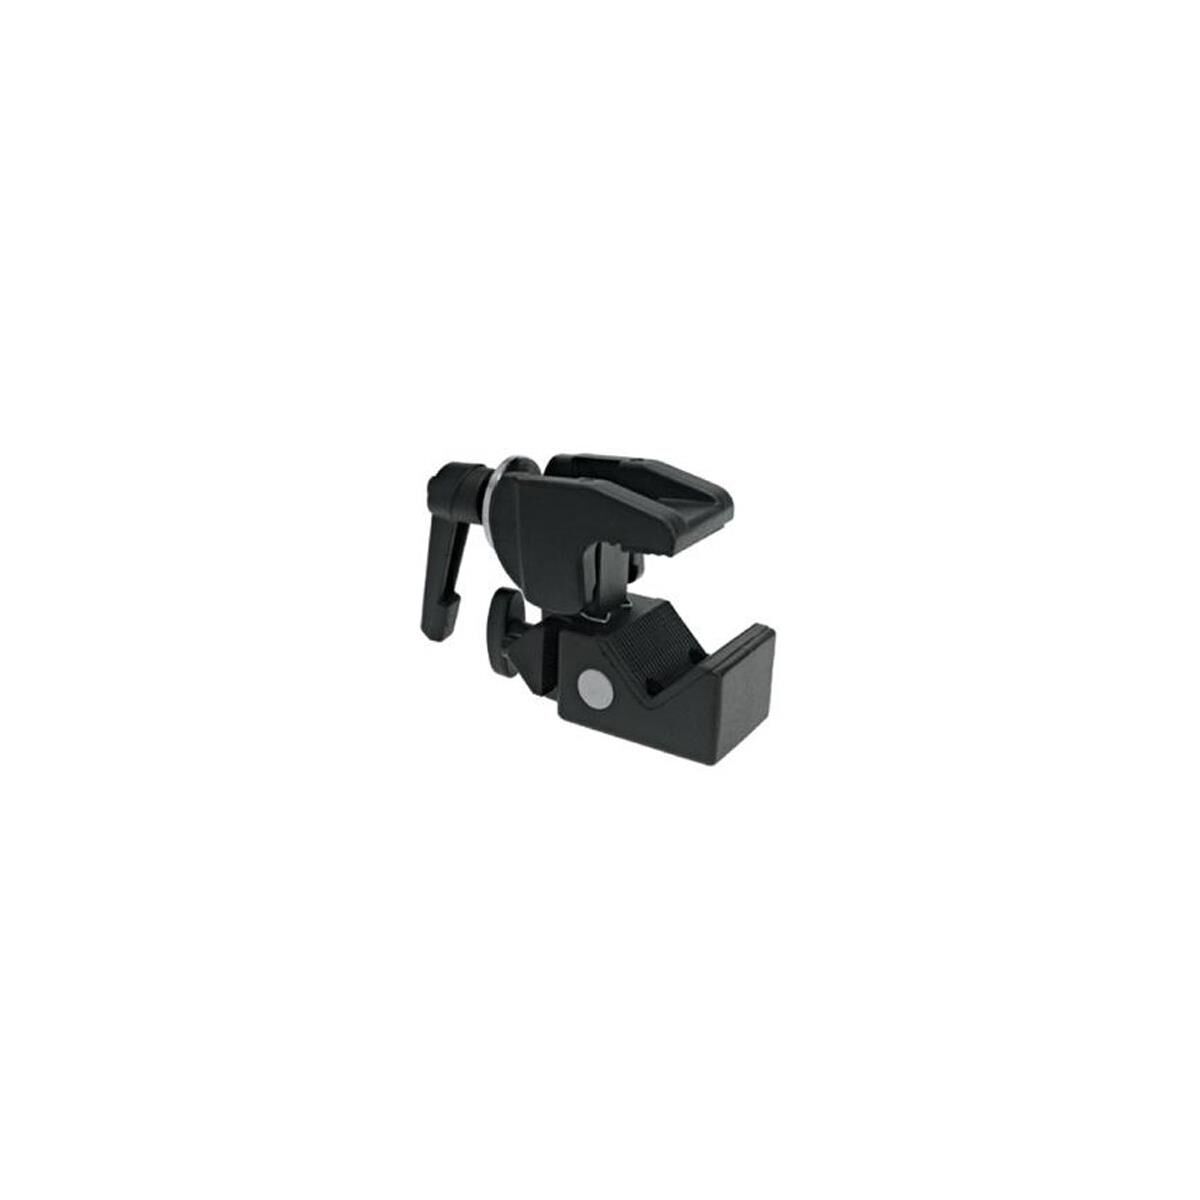 Kupo G701511 Convi Clamp with Adjustable Handle, Black